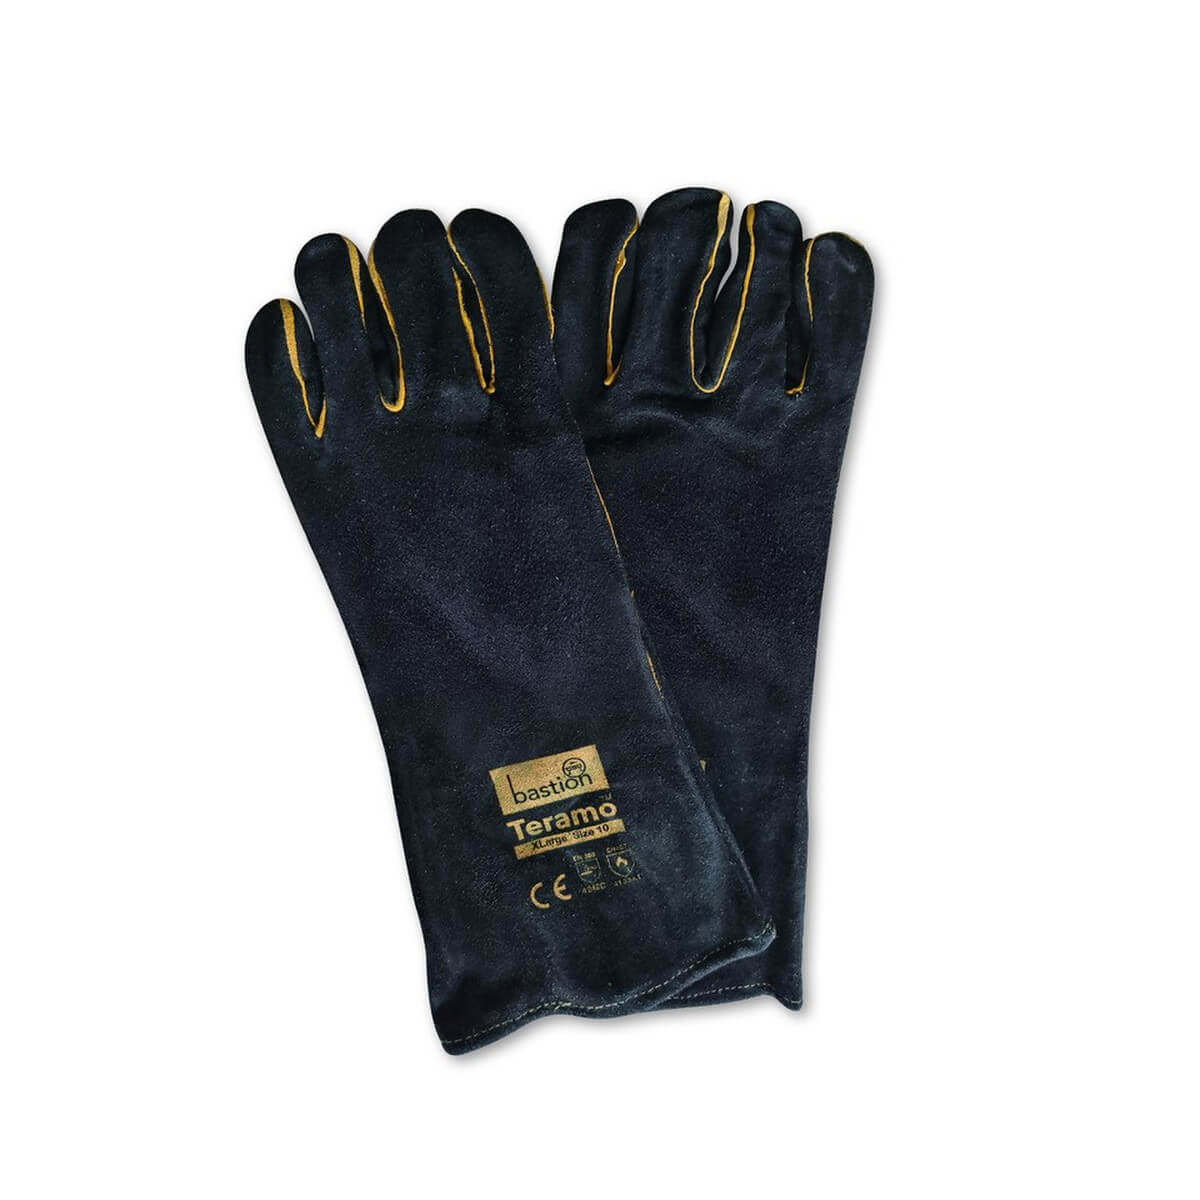 Bastion Teramo Welding Gloves